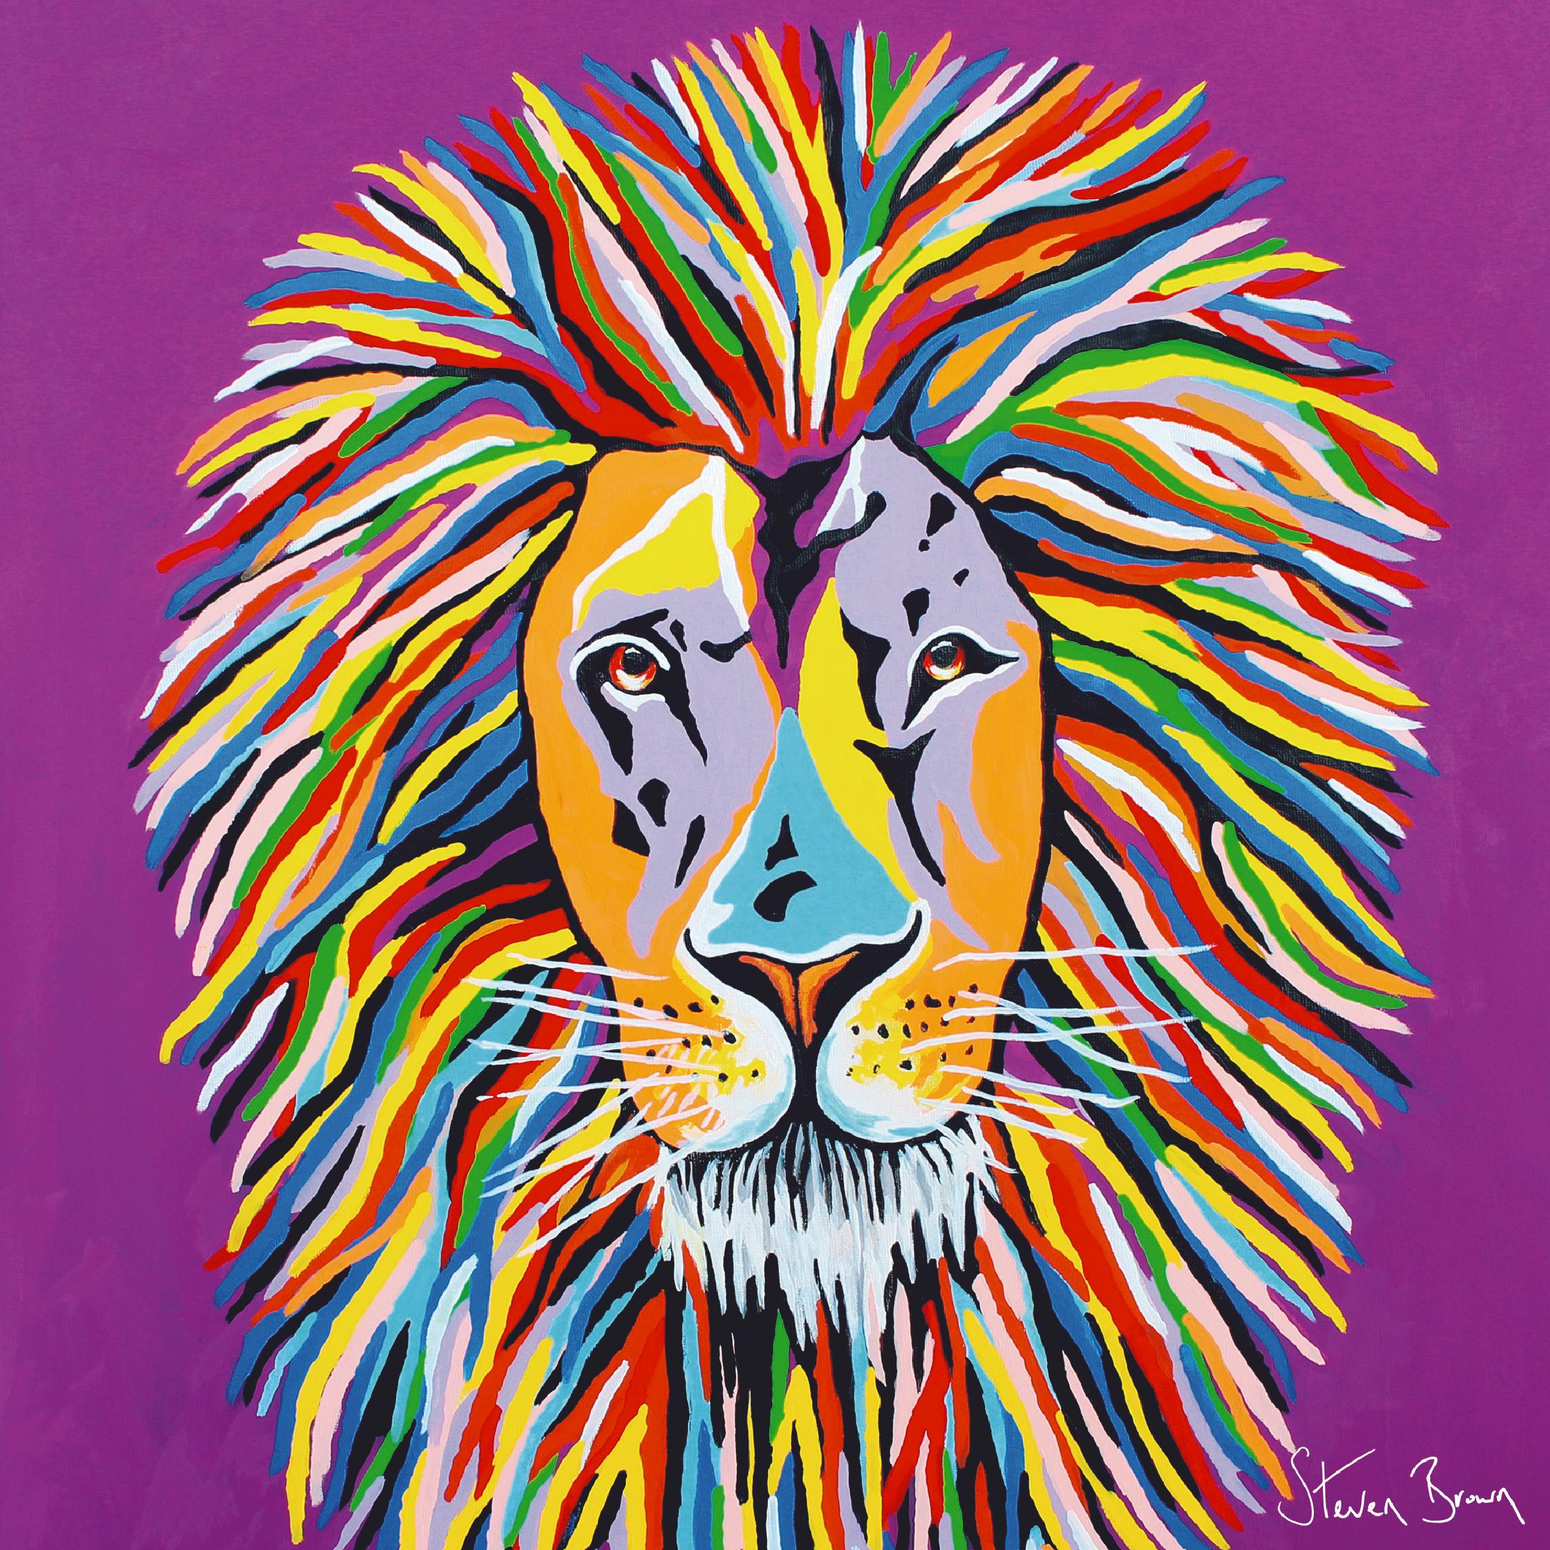 Multi-Coloured Lion Art by Steven Brown